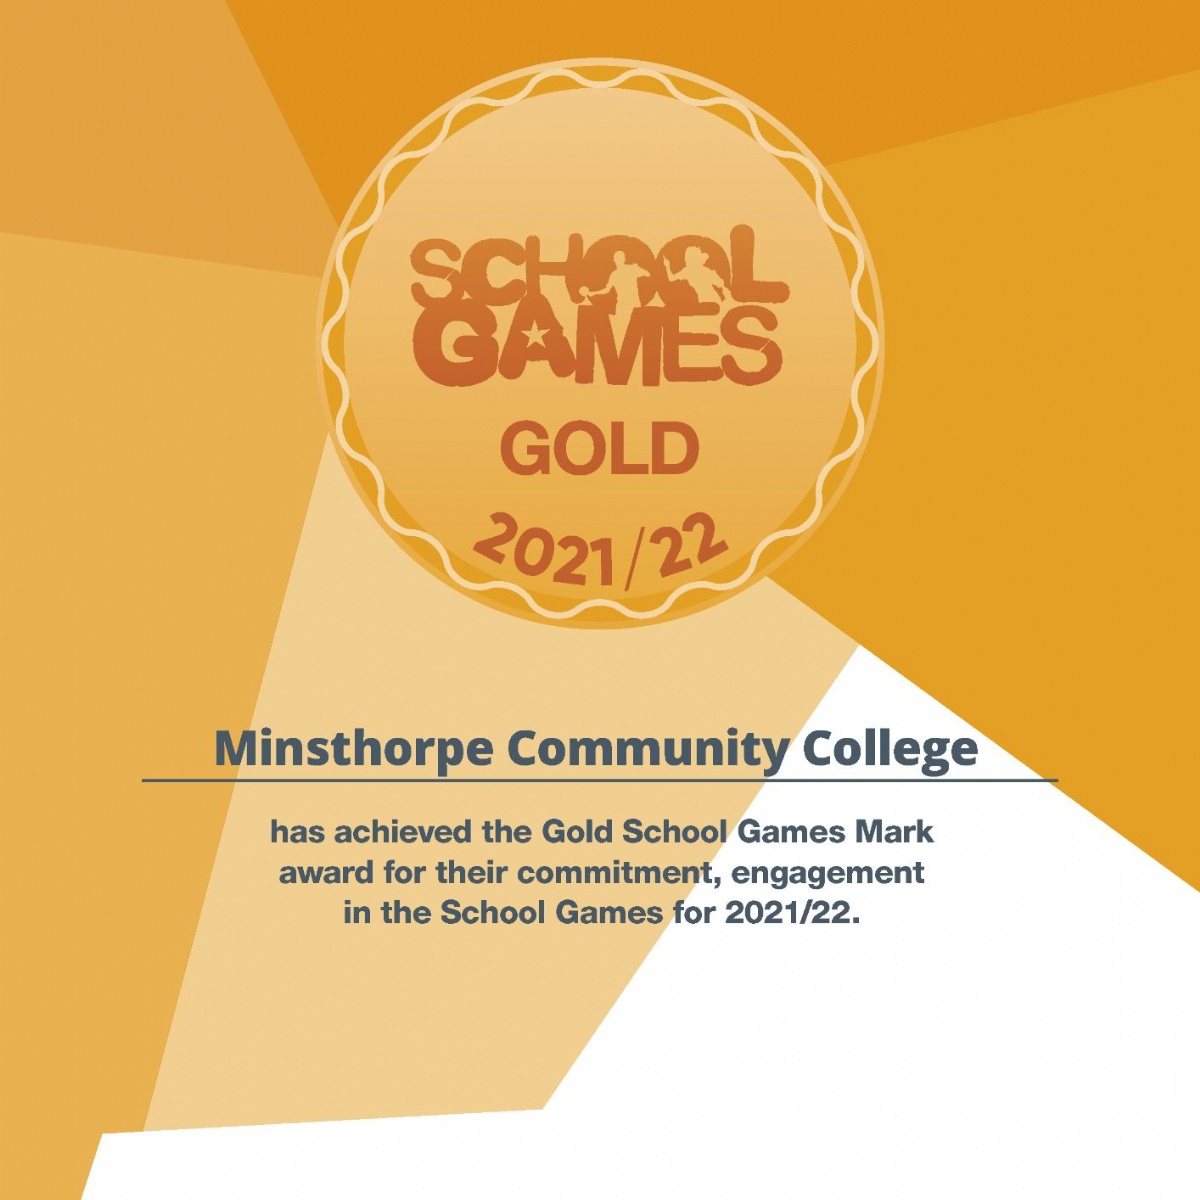 Minsthorpe Community College - School Games Gold Award 21/22